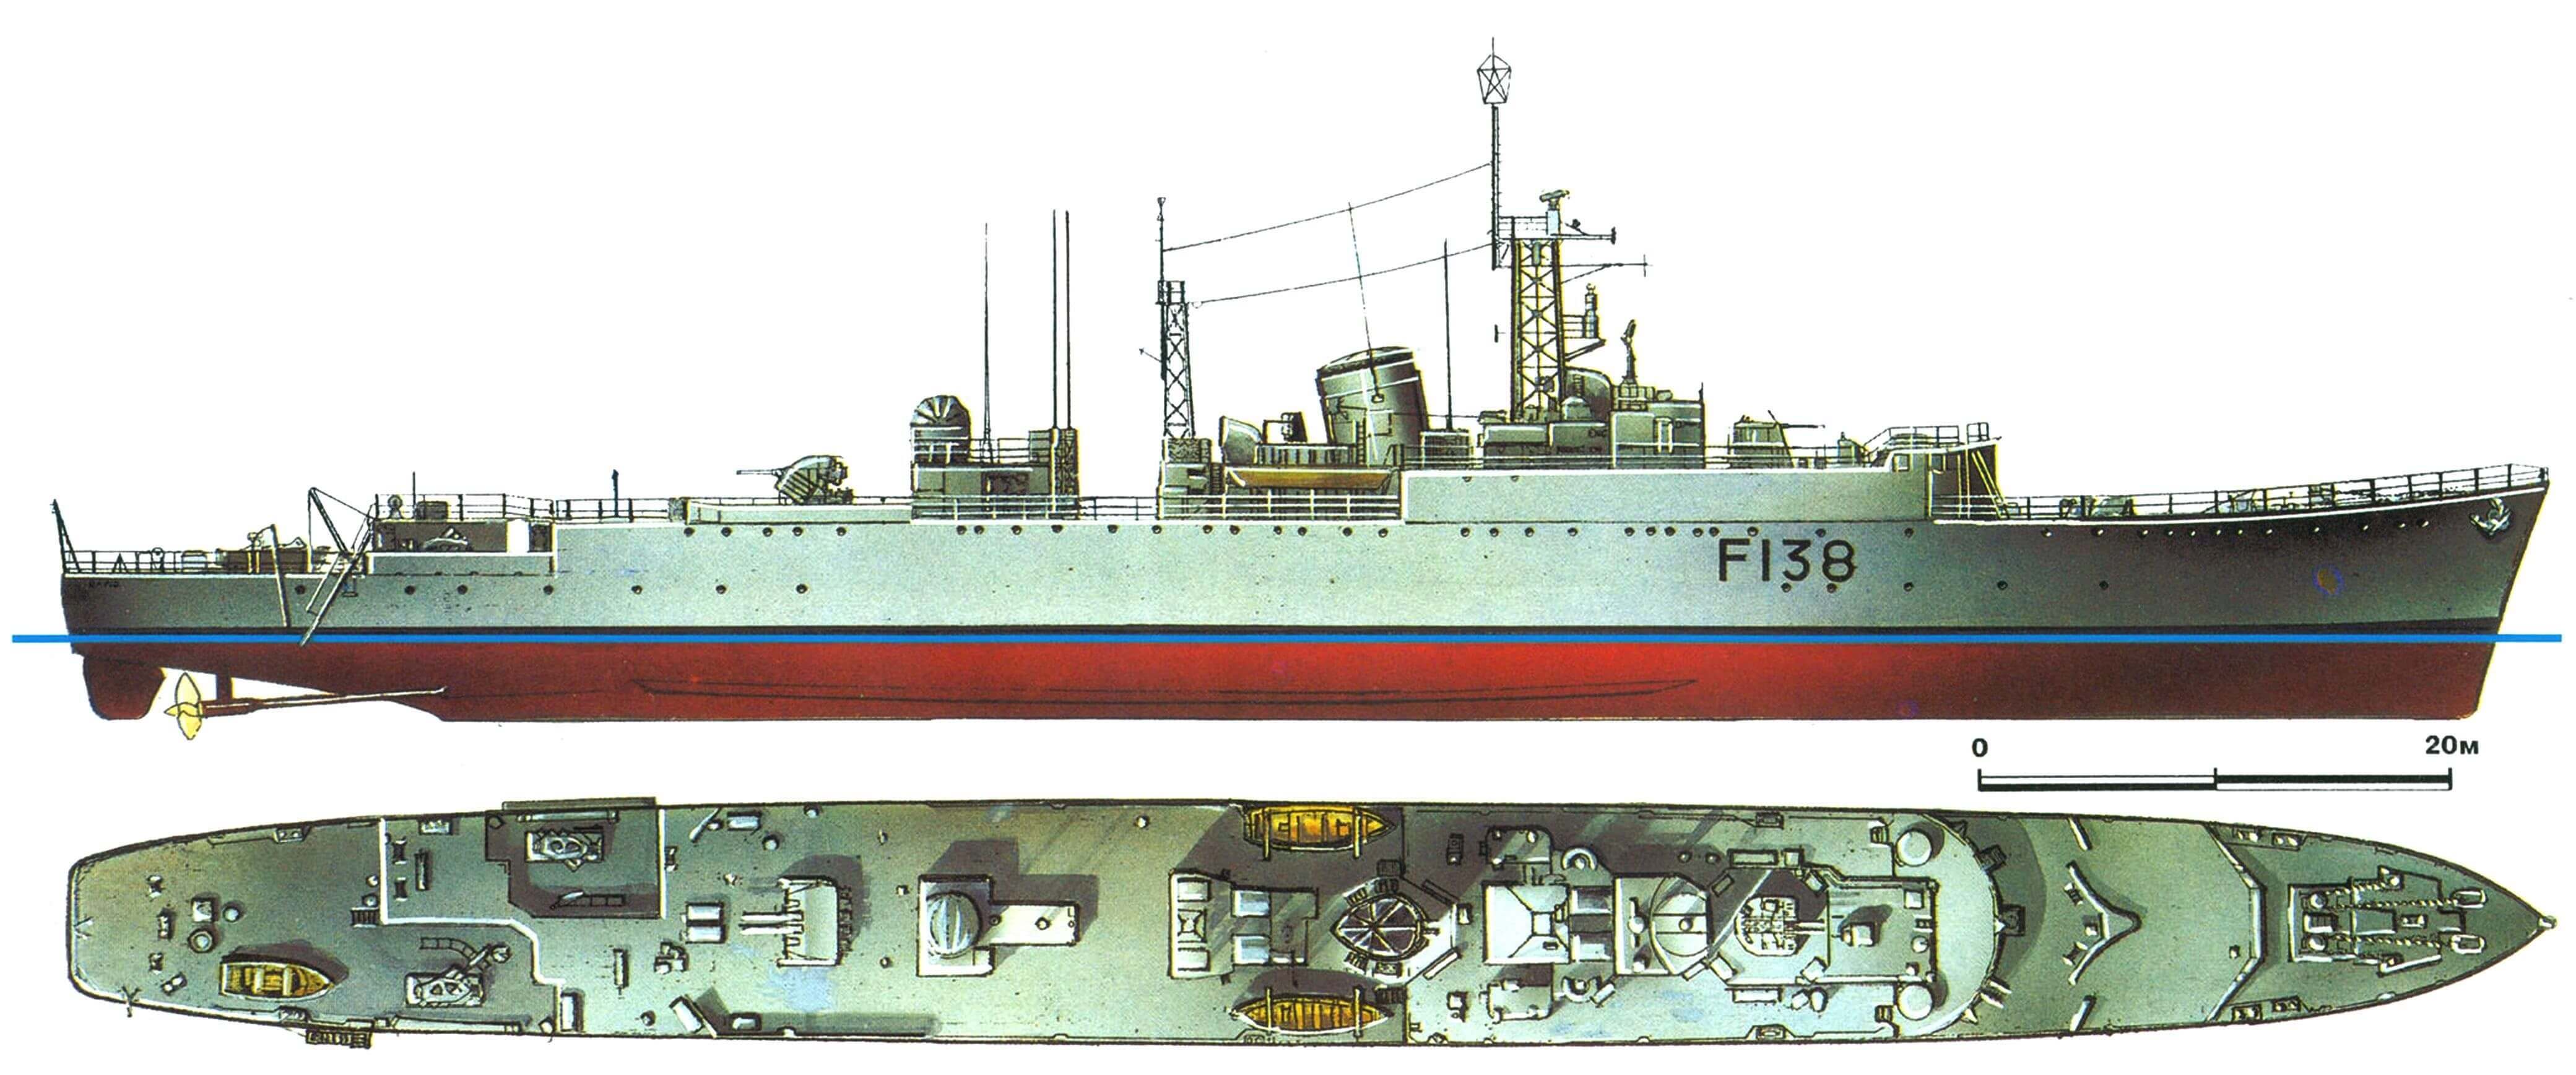 Противолодочный фрегат "Рэпид", Англия, 1943/1953 г.